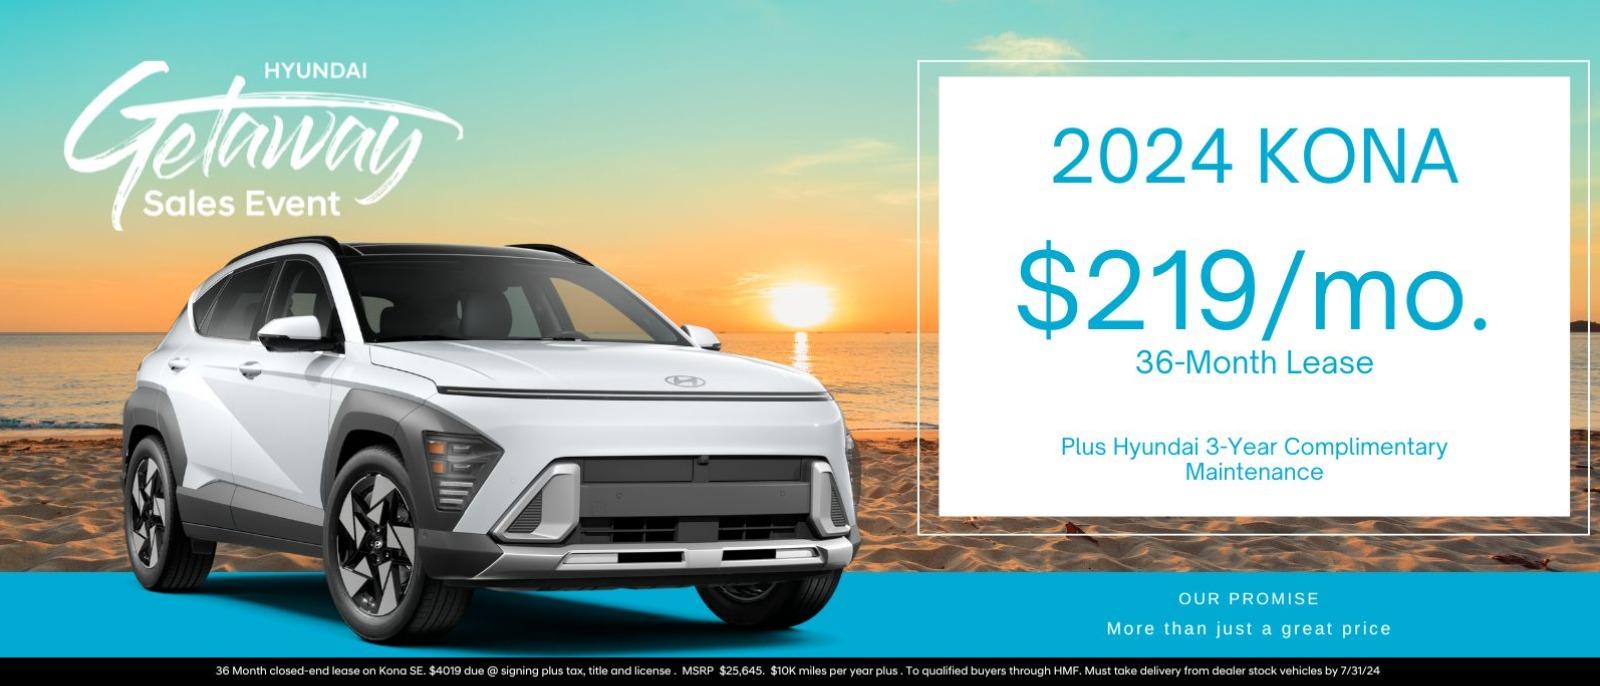 2024 Kona 
$219/mo.36-month lease
Plus Hyundai 3-Year Complimentary Maintenance